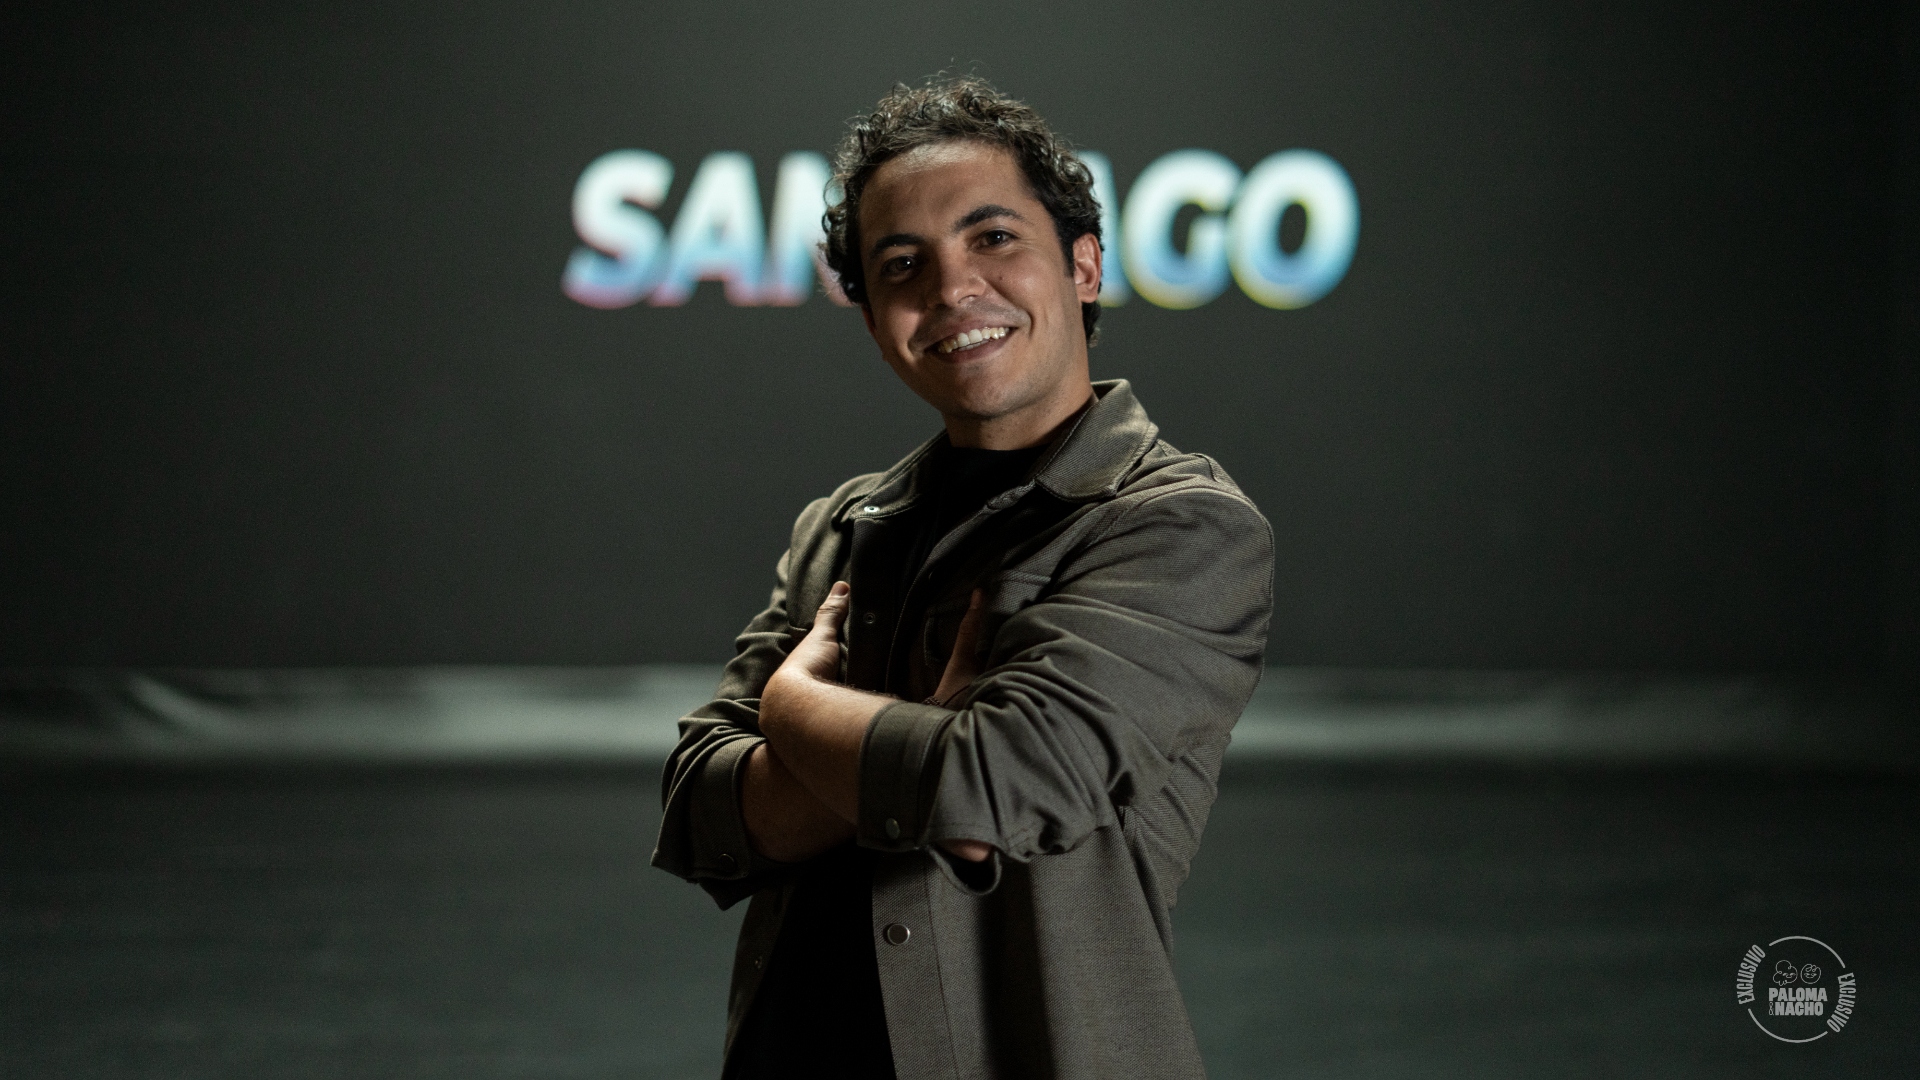 Santiago García Cinematógrafo